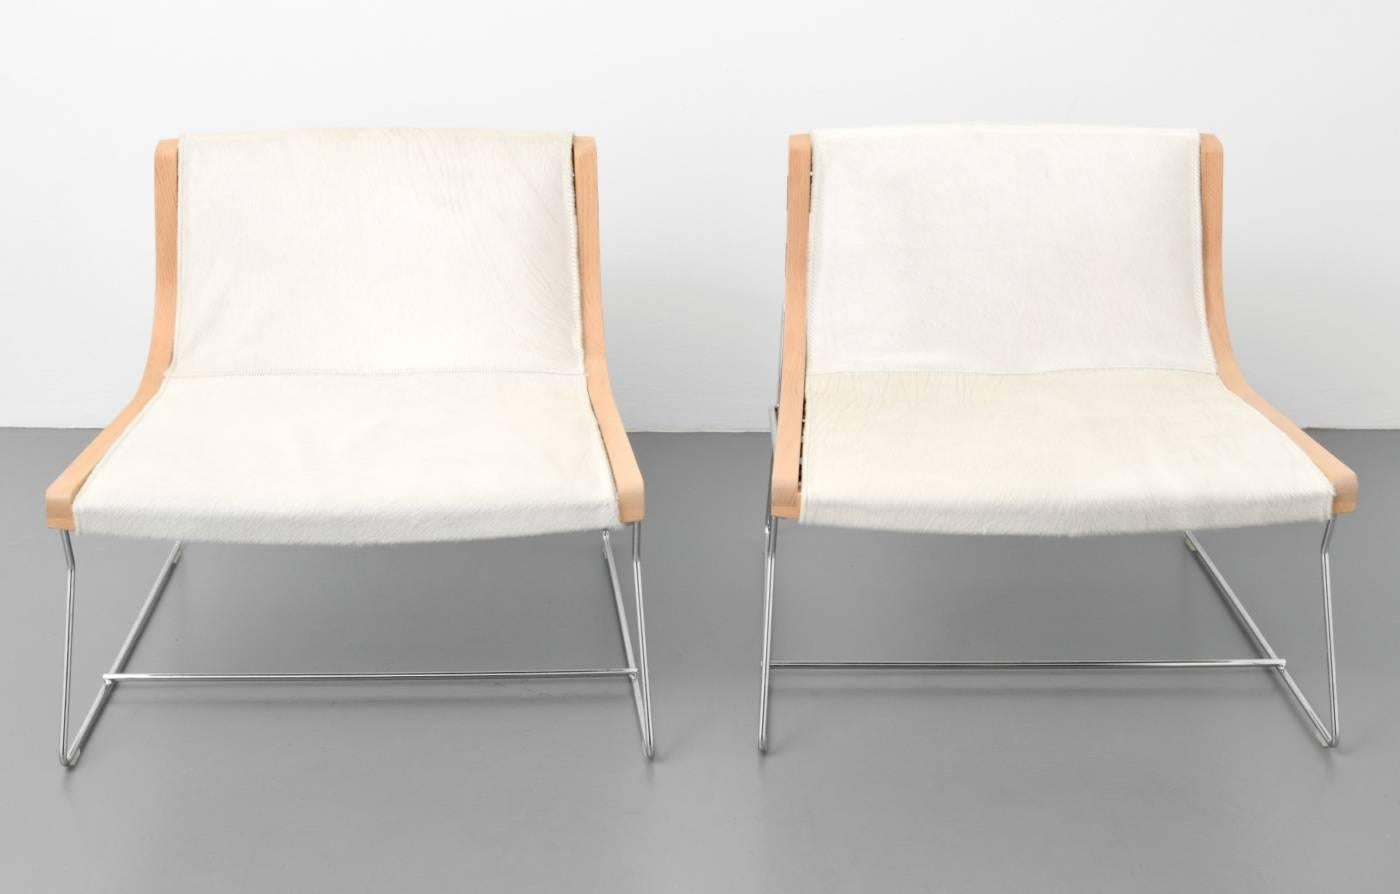 Pair of Paltrona JJ lounge chairs by Antonio Citterio for B&B Italia.